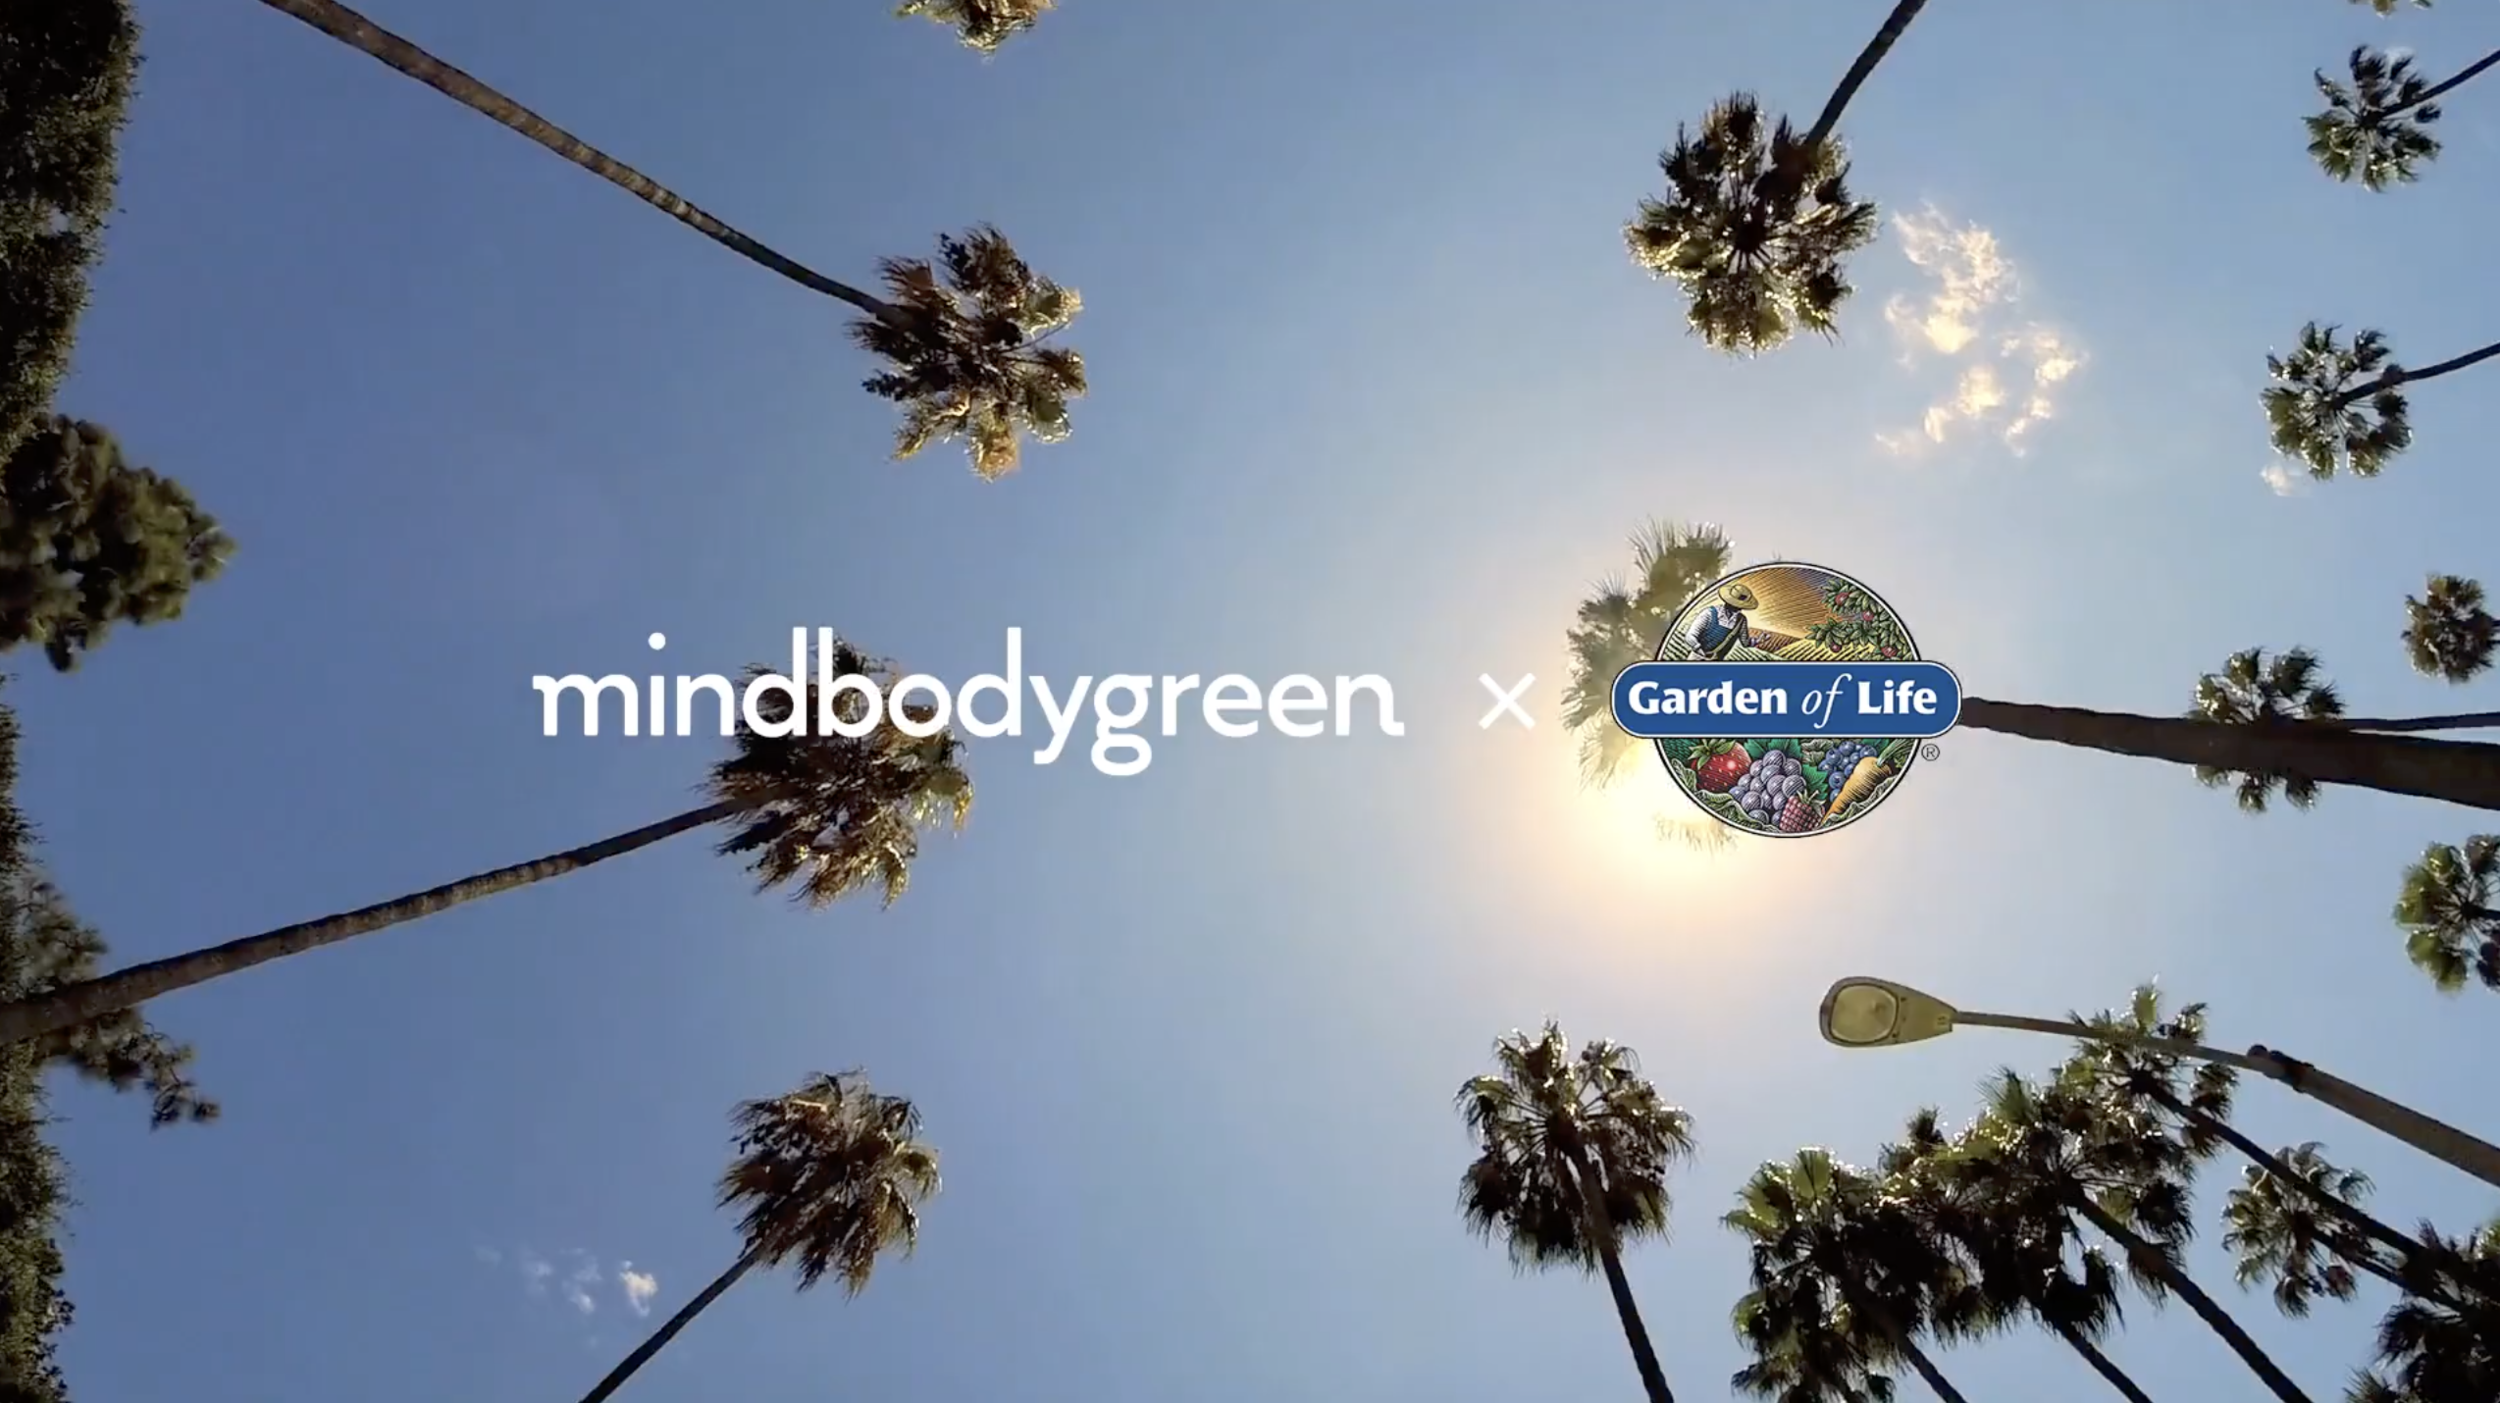 mindbodygreen x Garden of Life